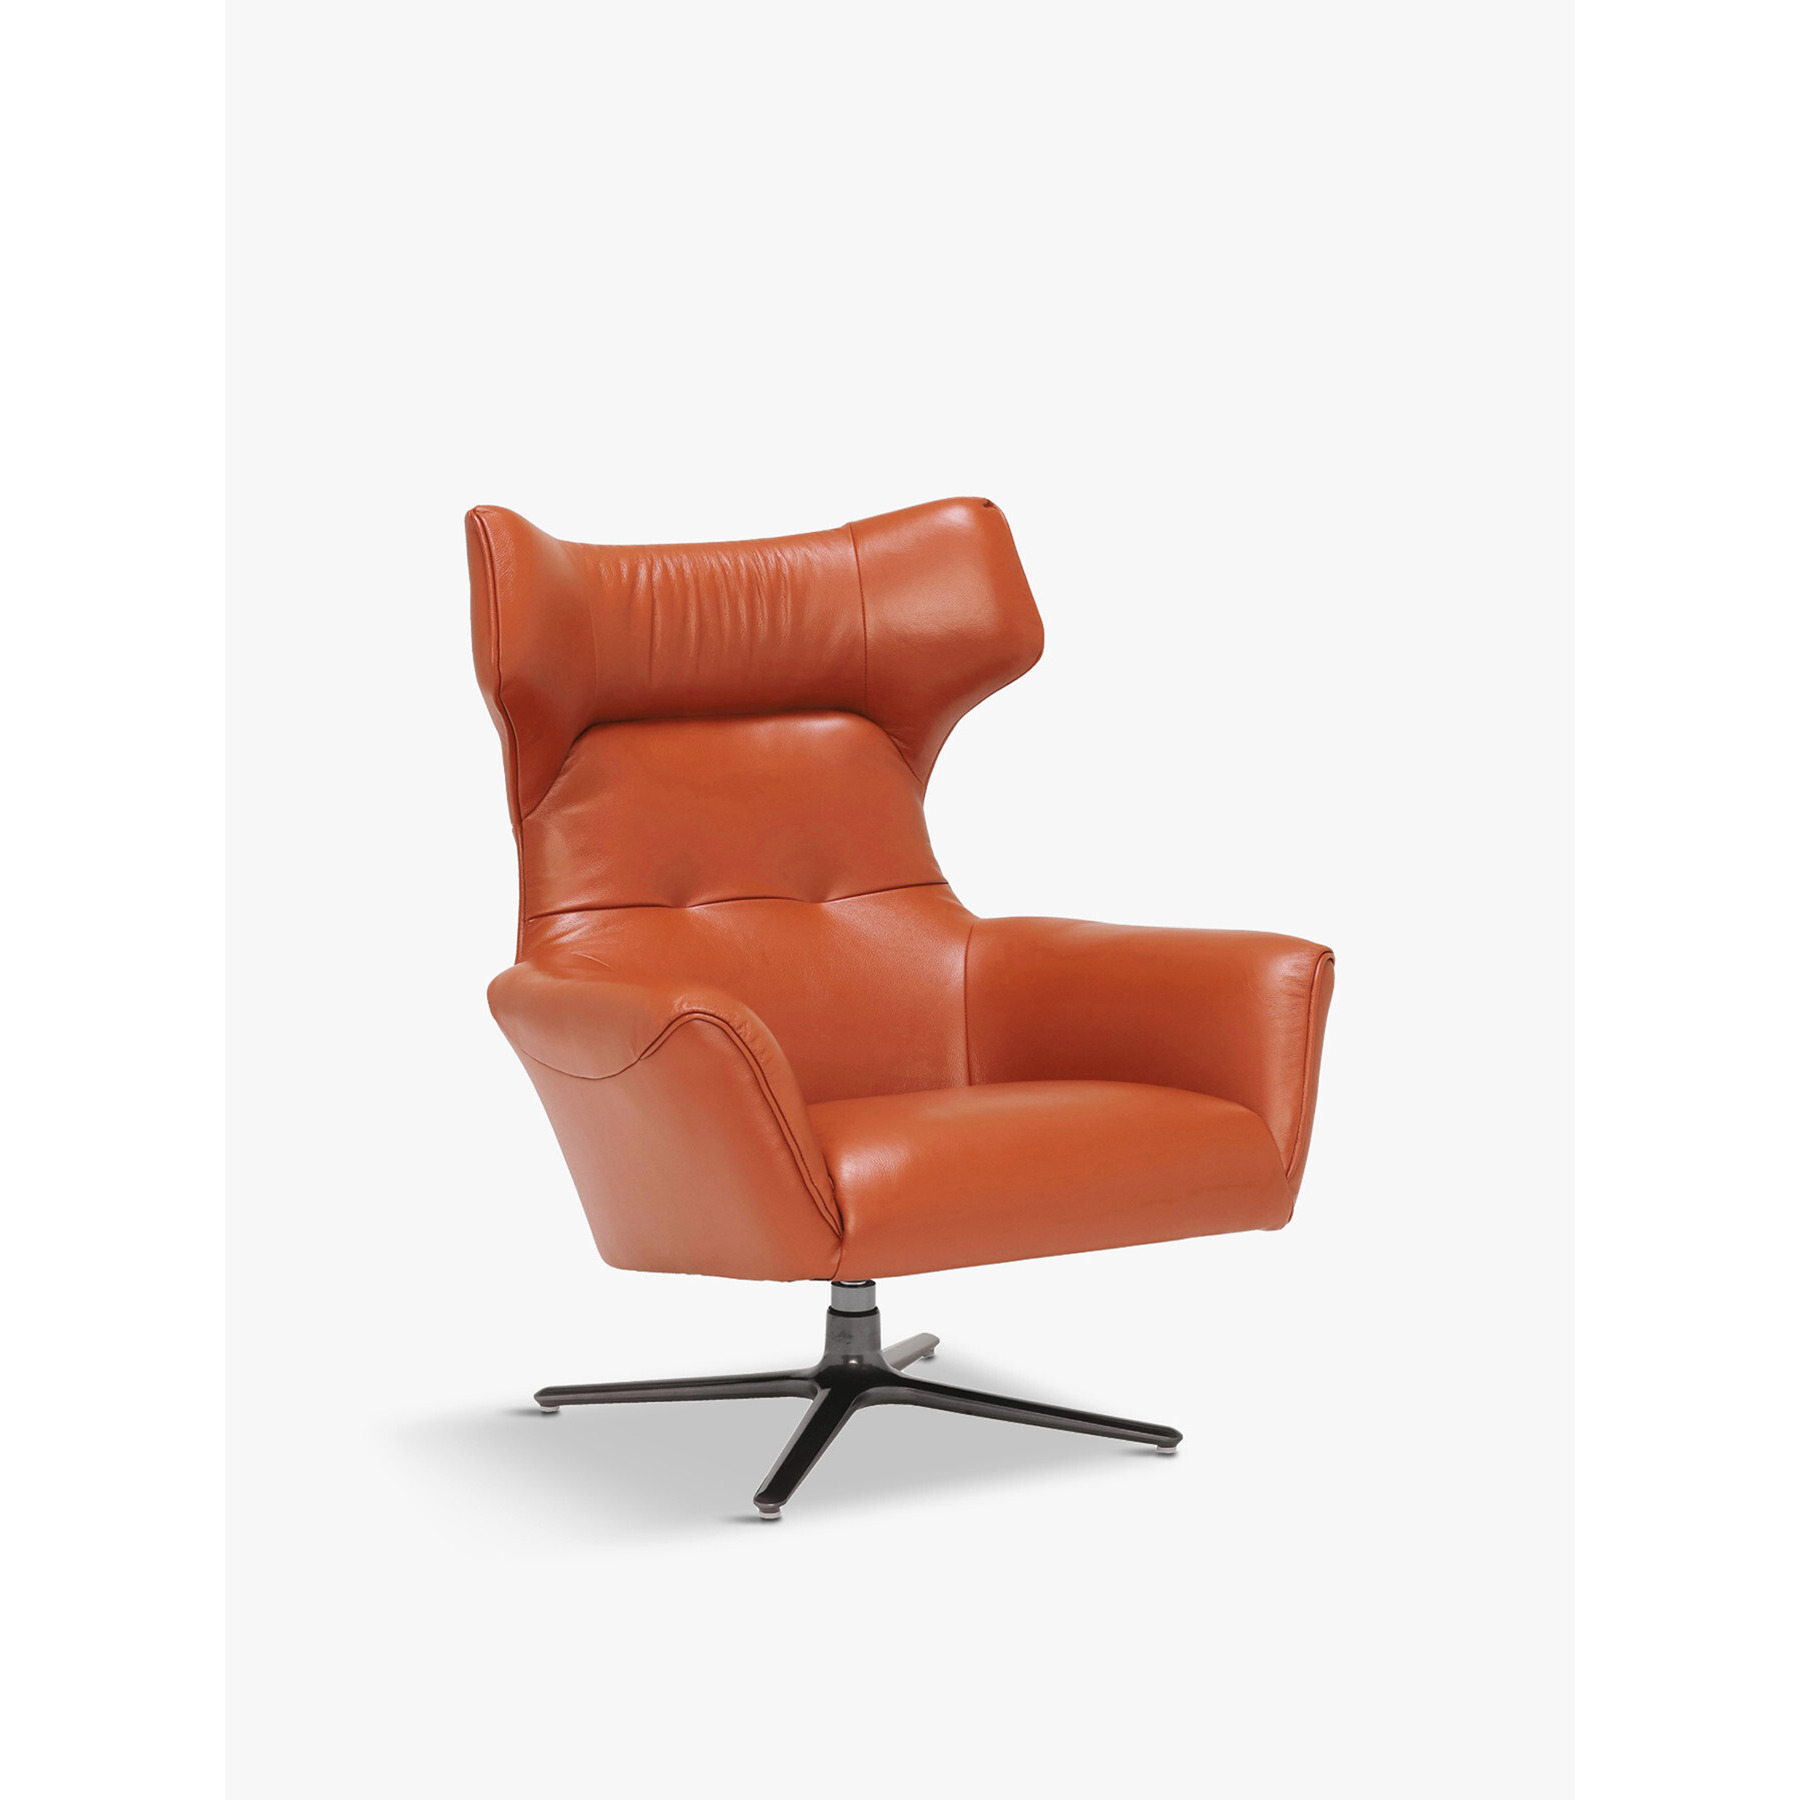 Barker and Stonehouse Jax Swivel Chair, Melbourne Ochre Orange - image 1